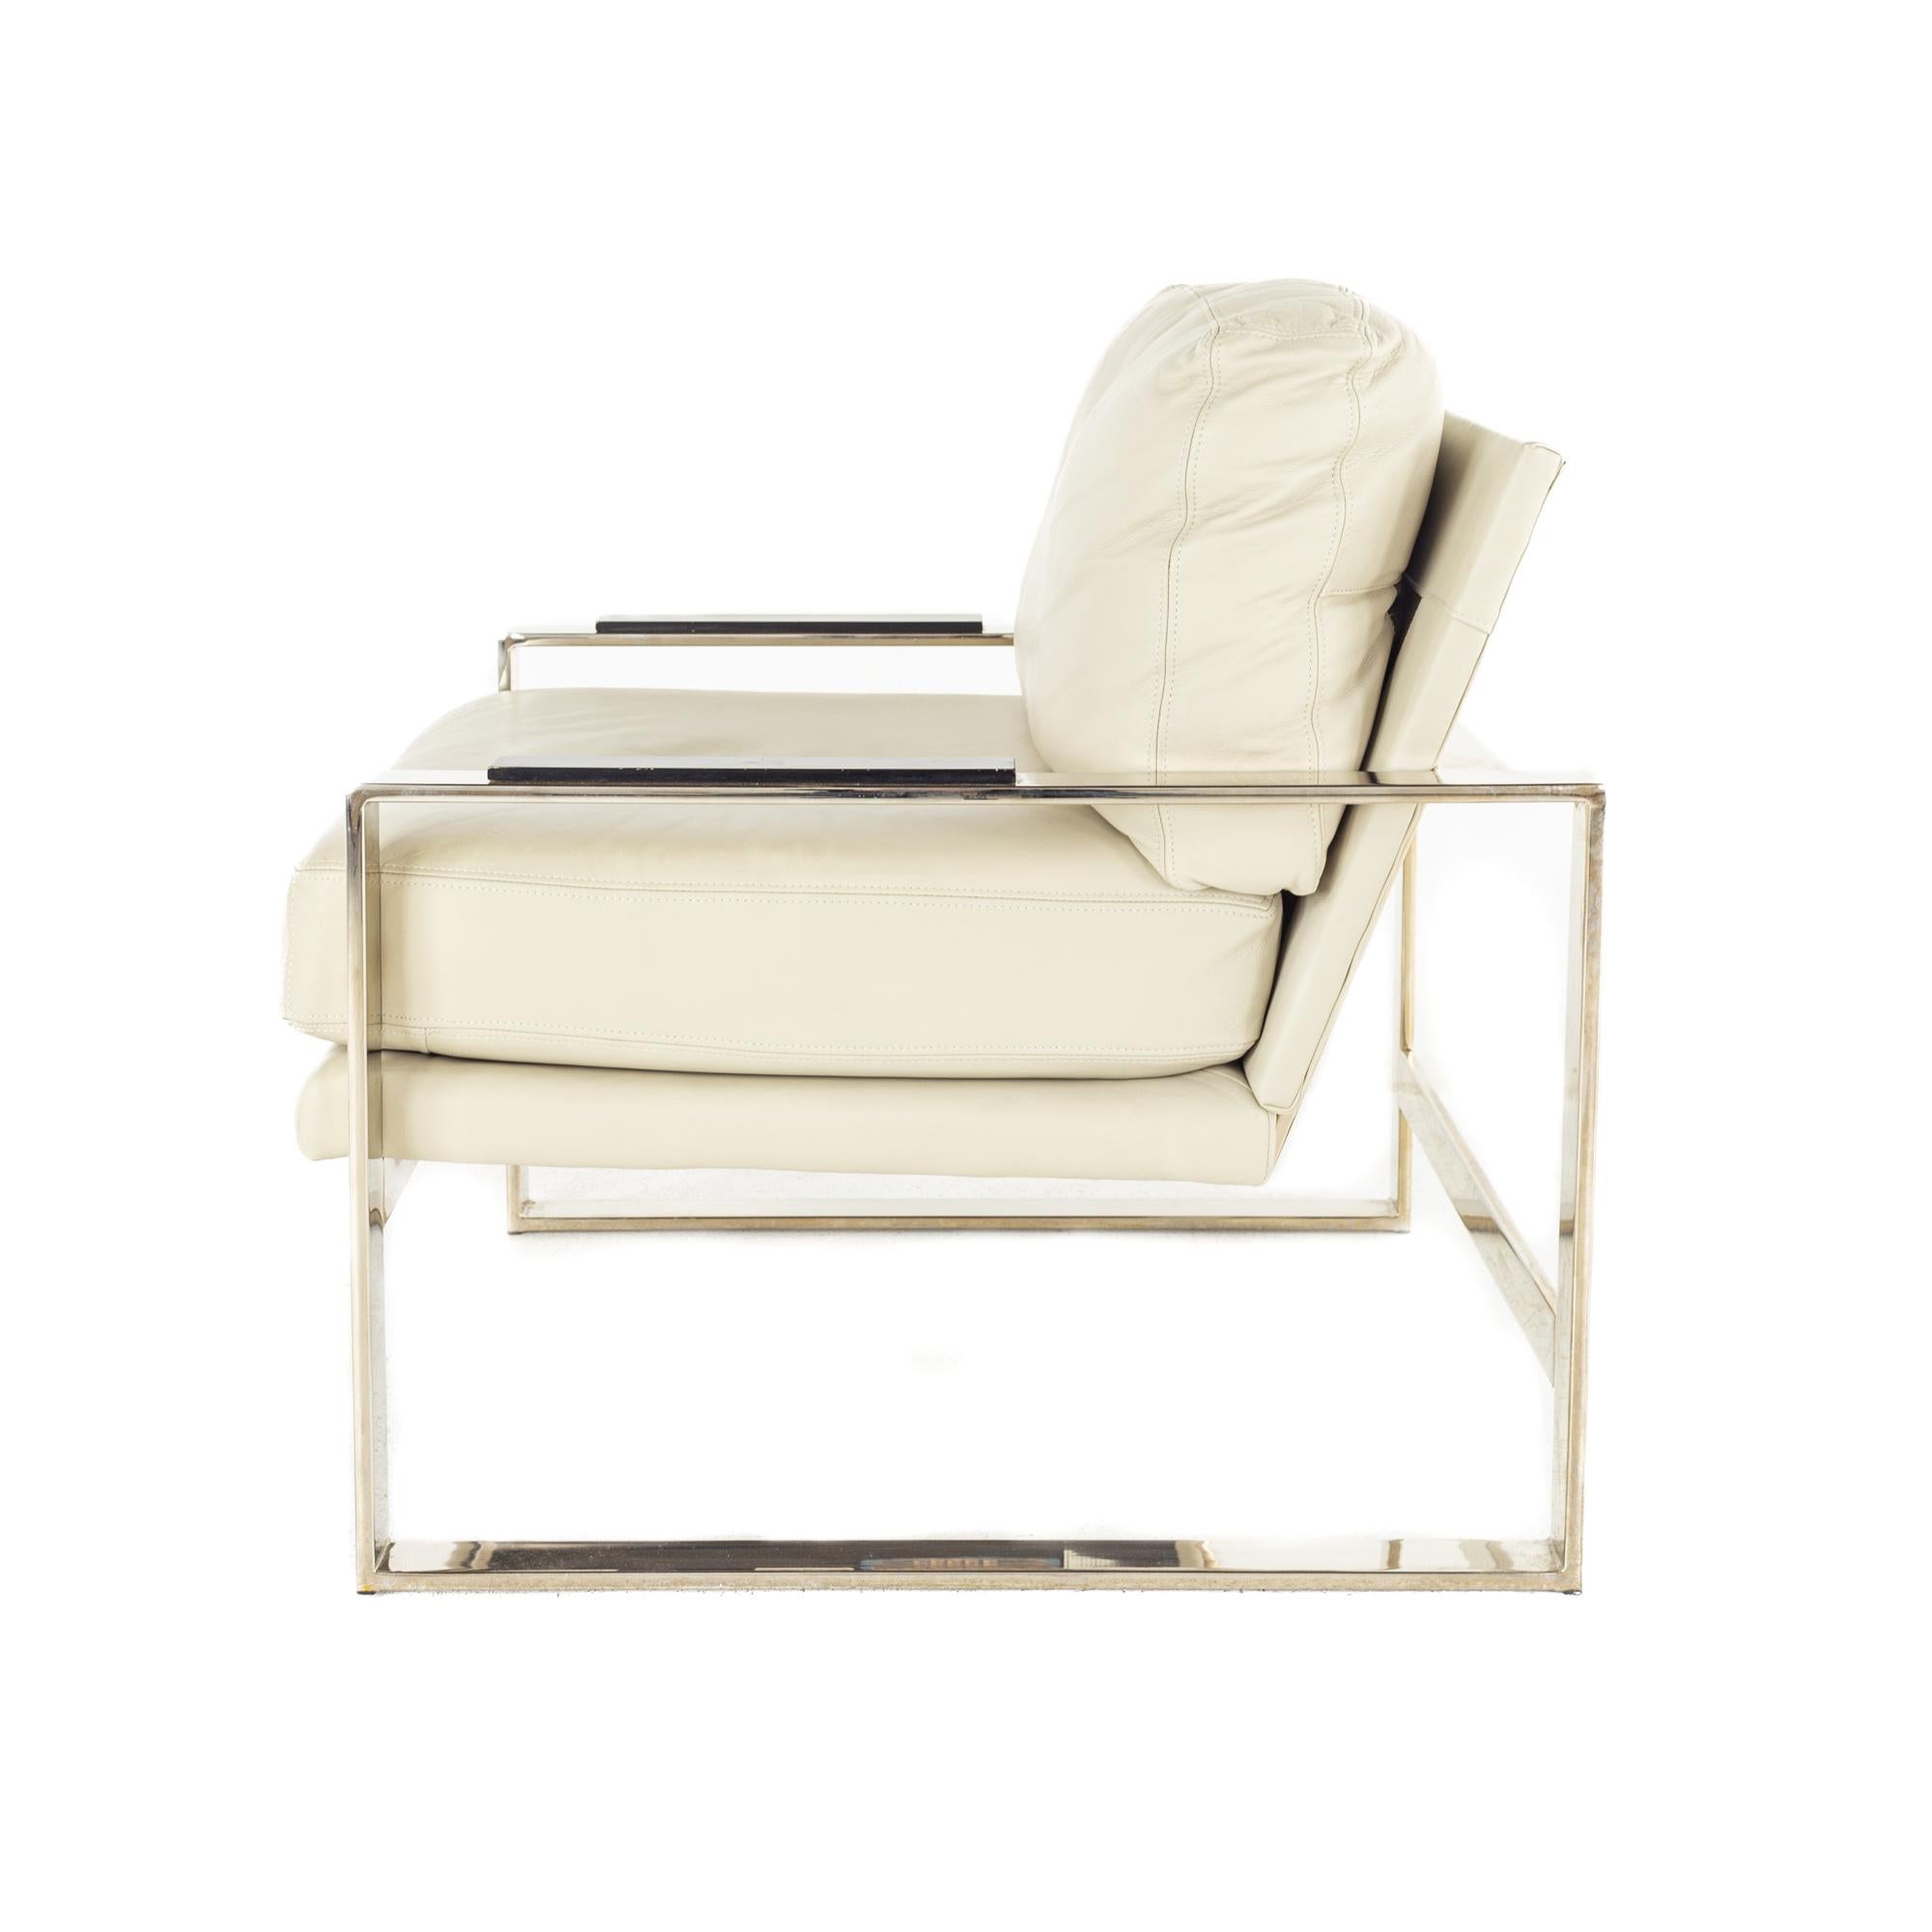 Late 20th Century Milo Baughman Syle Mid Century Chrome and Leather Flatbar Lounge Chair For Sale